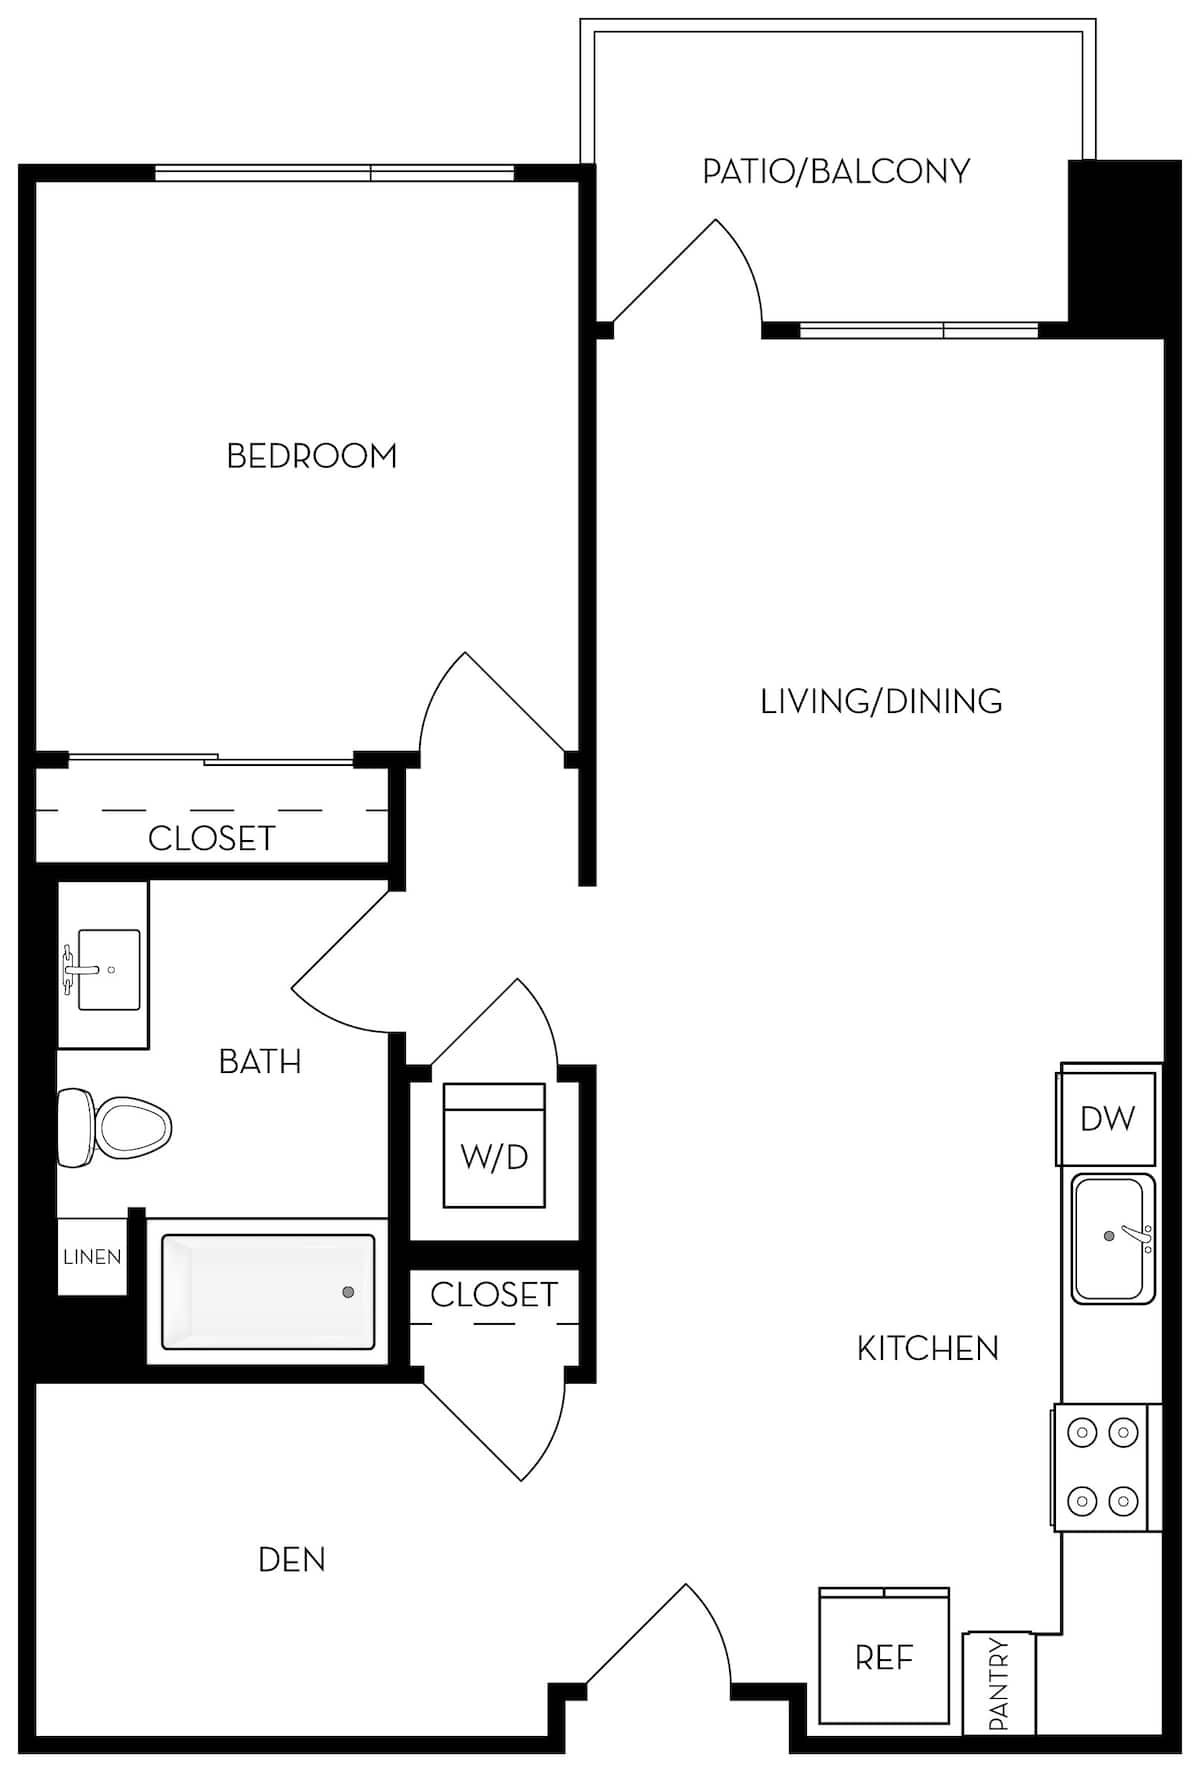 Floorplan diagram for A1 - 1BR 1BA Flat, showing 1 bedroom